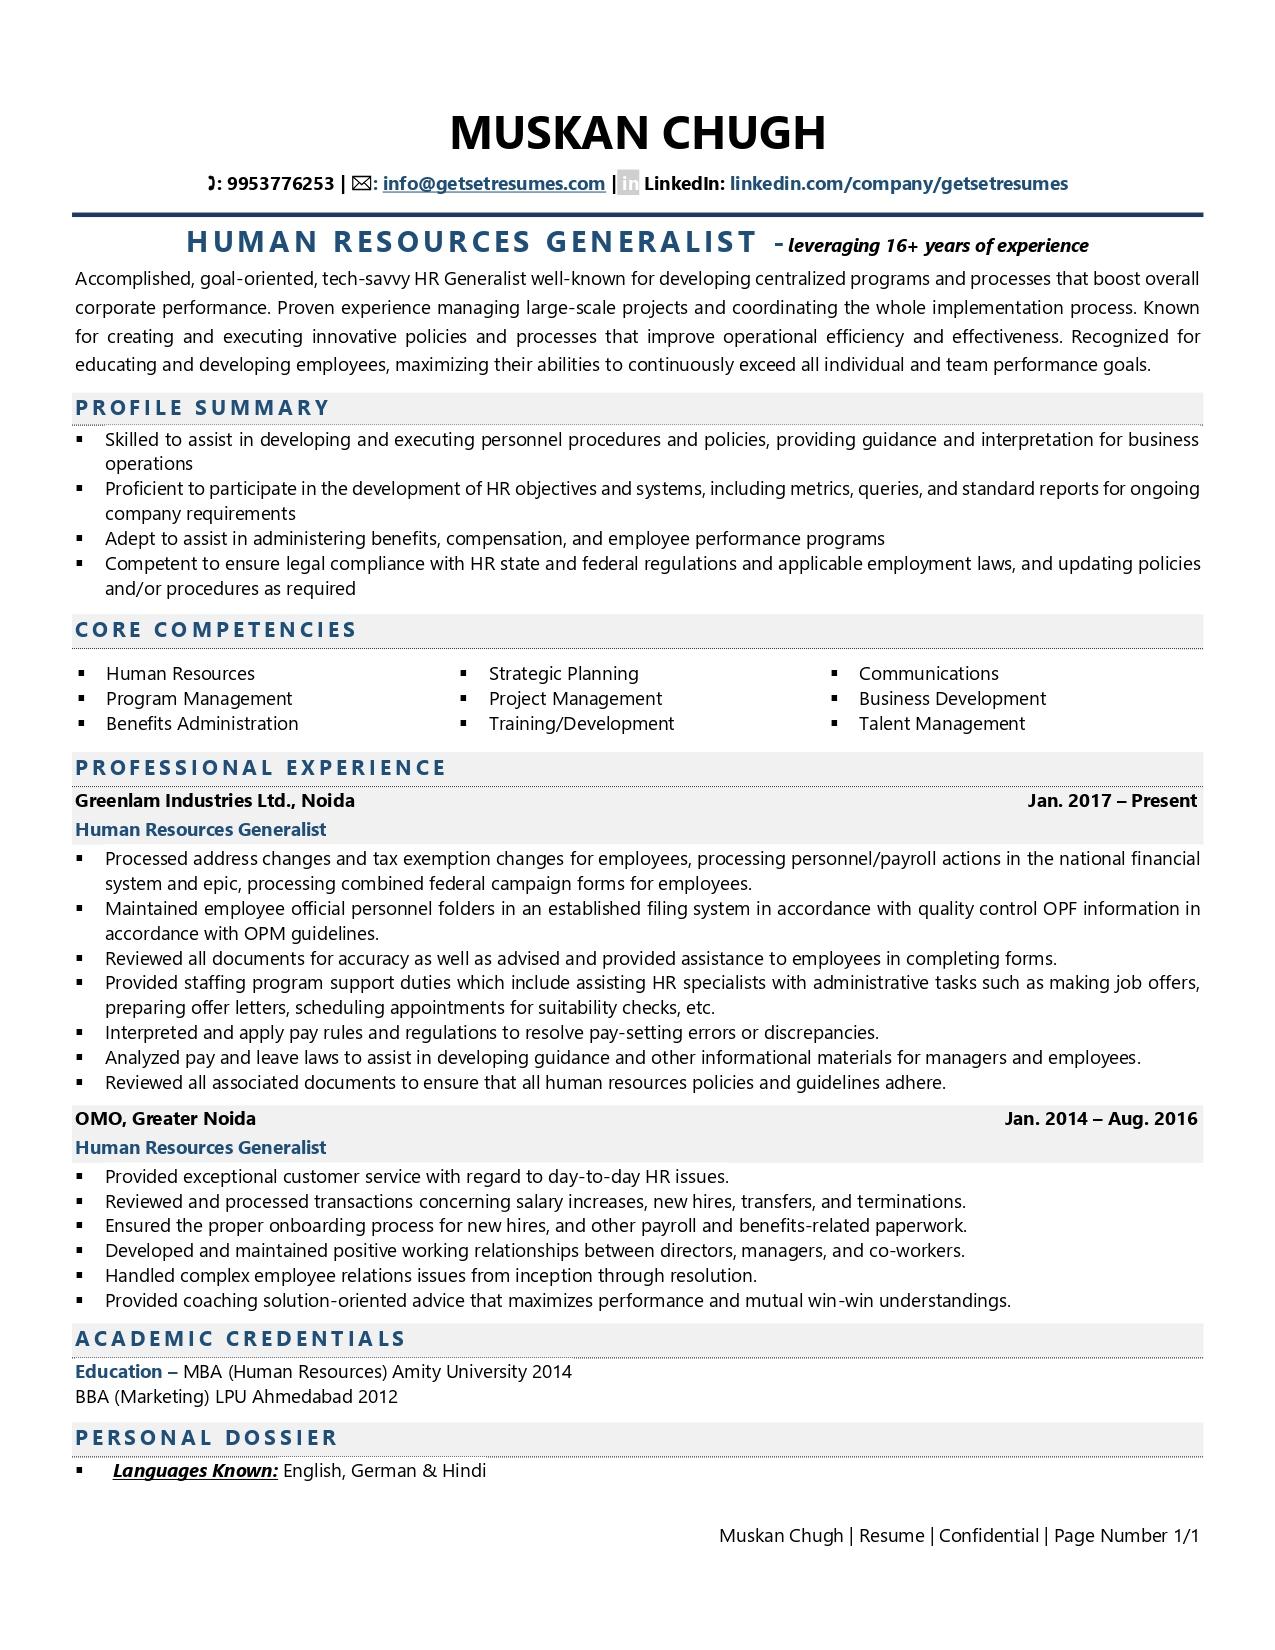 Human Resource Generalist Resume Examples & Template (with job winning